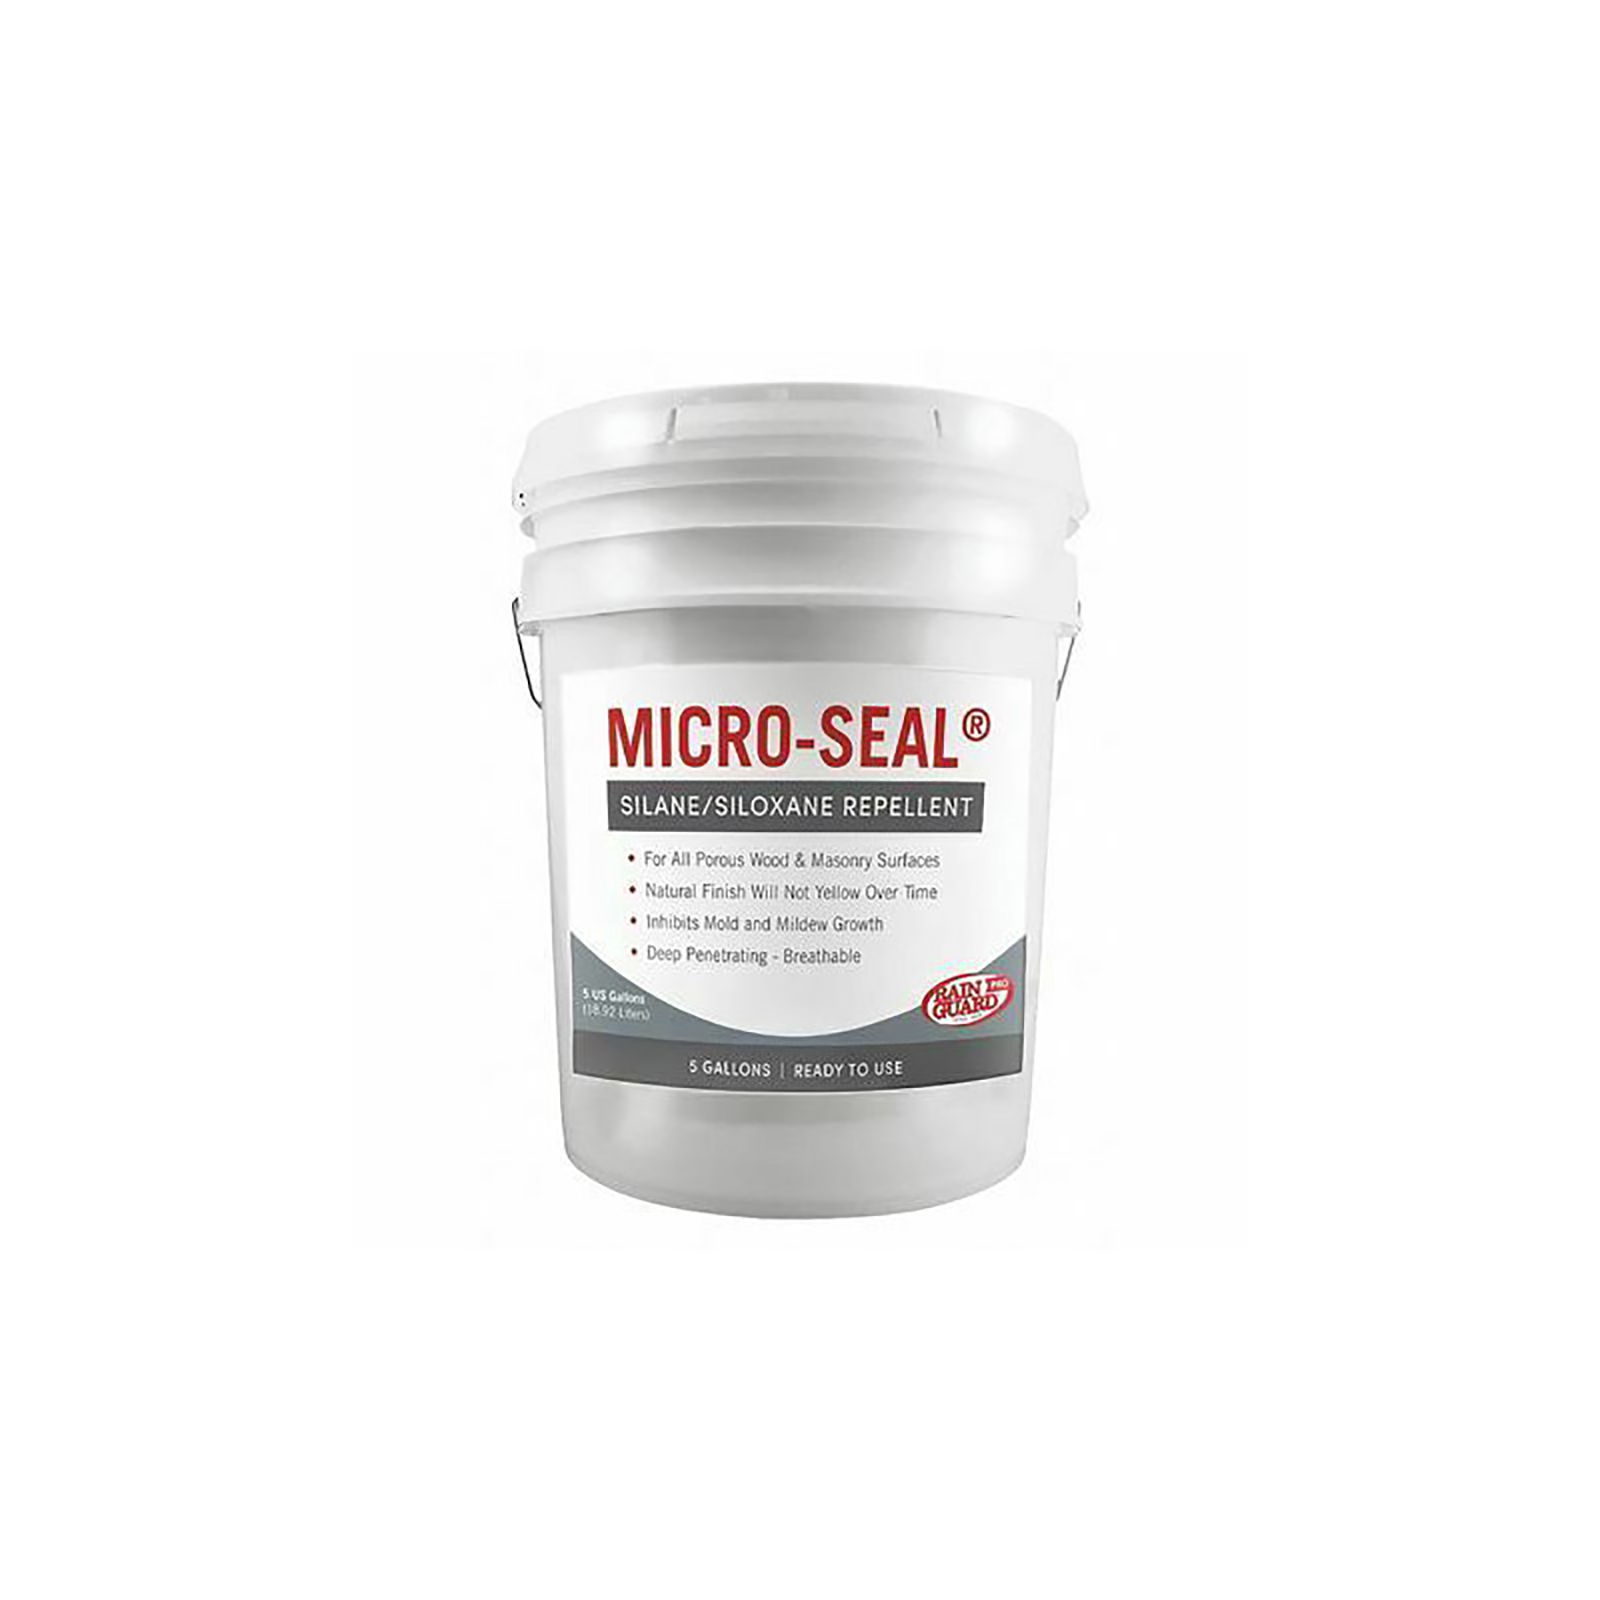 Rainguard Micro-seal 5gal Penetrating Silane Siloxane Repellent Sealer - Clear